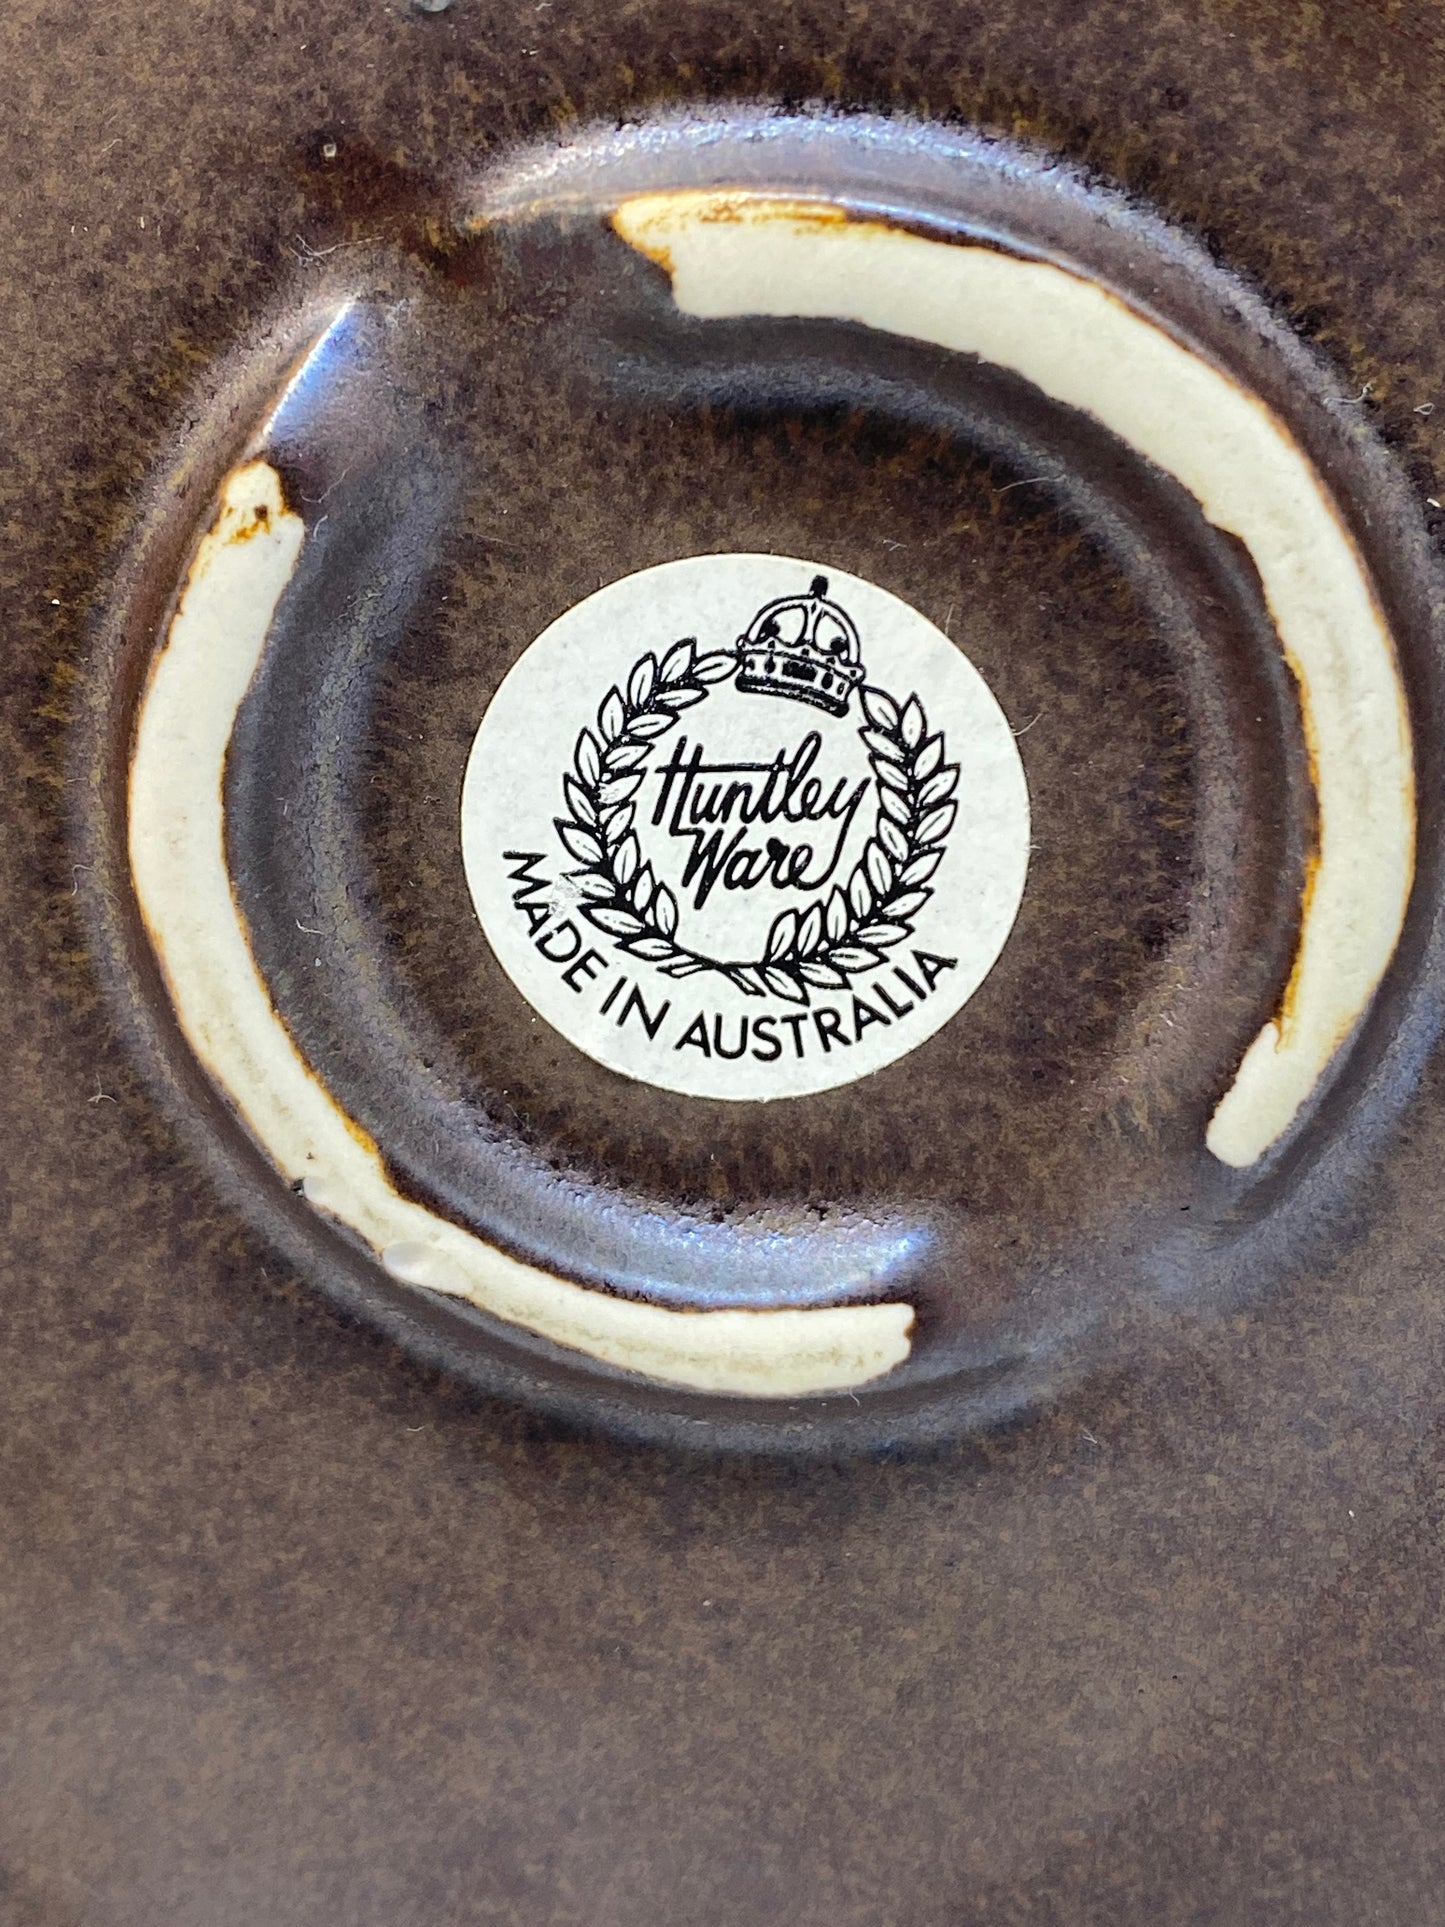 Vintage Australian Huntley Ware casserole with original sticker